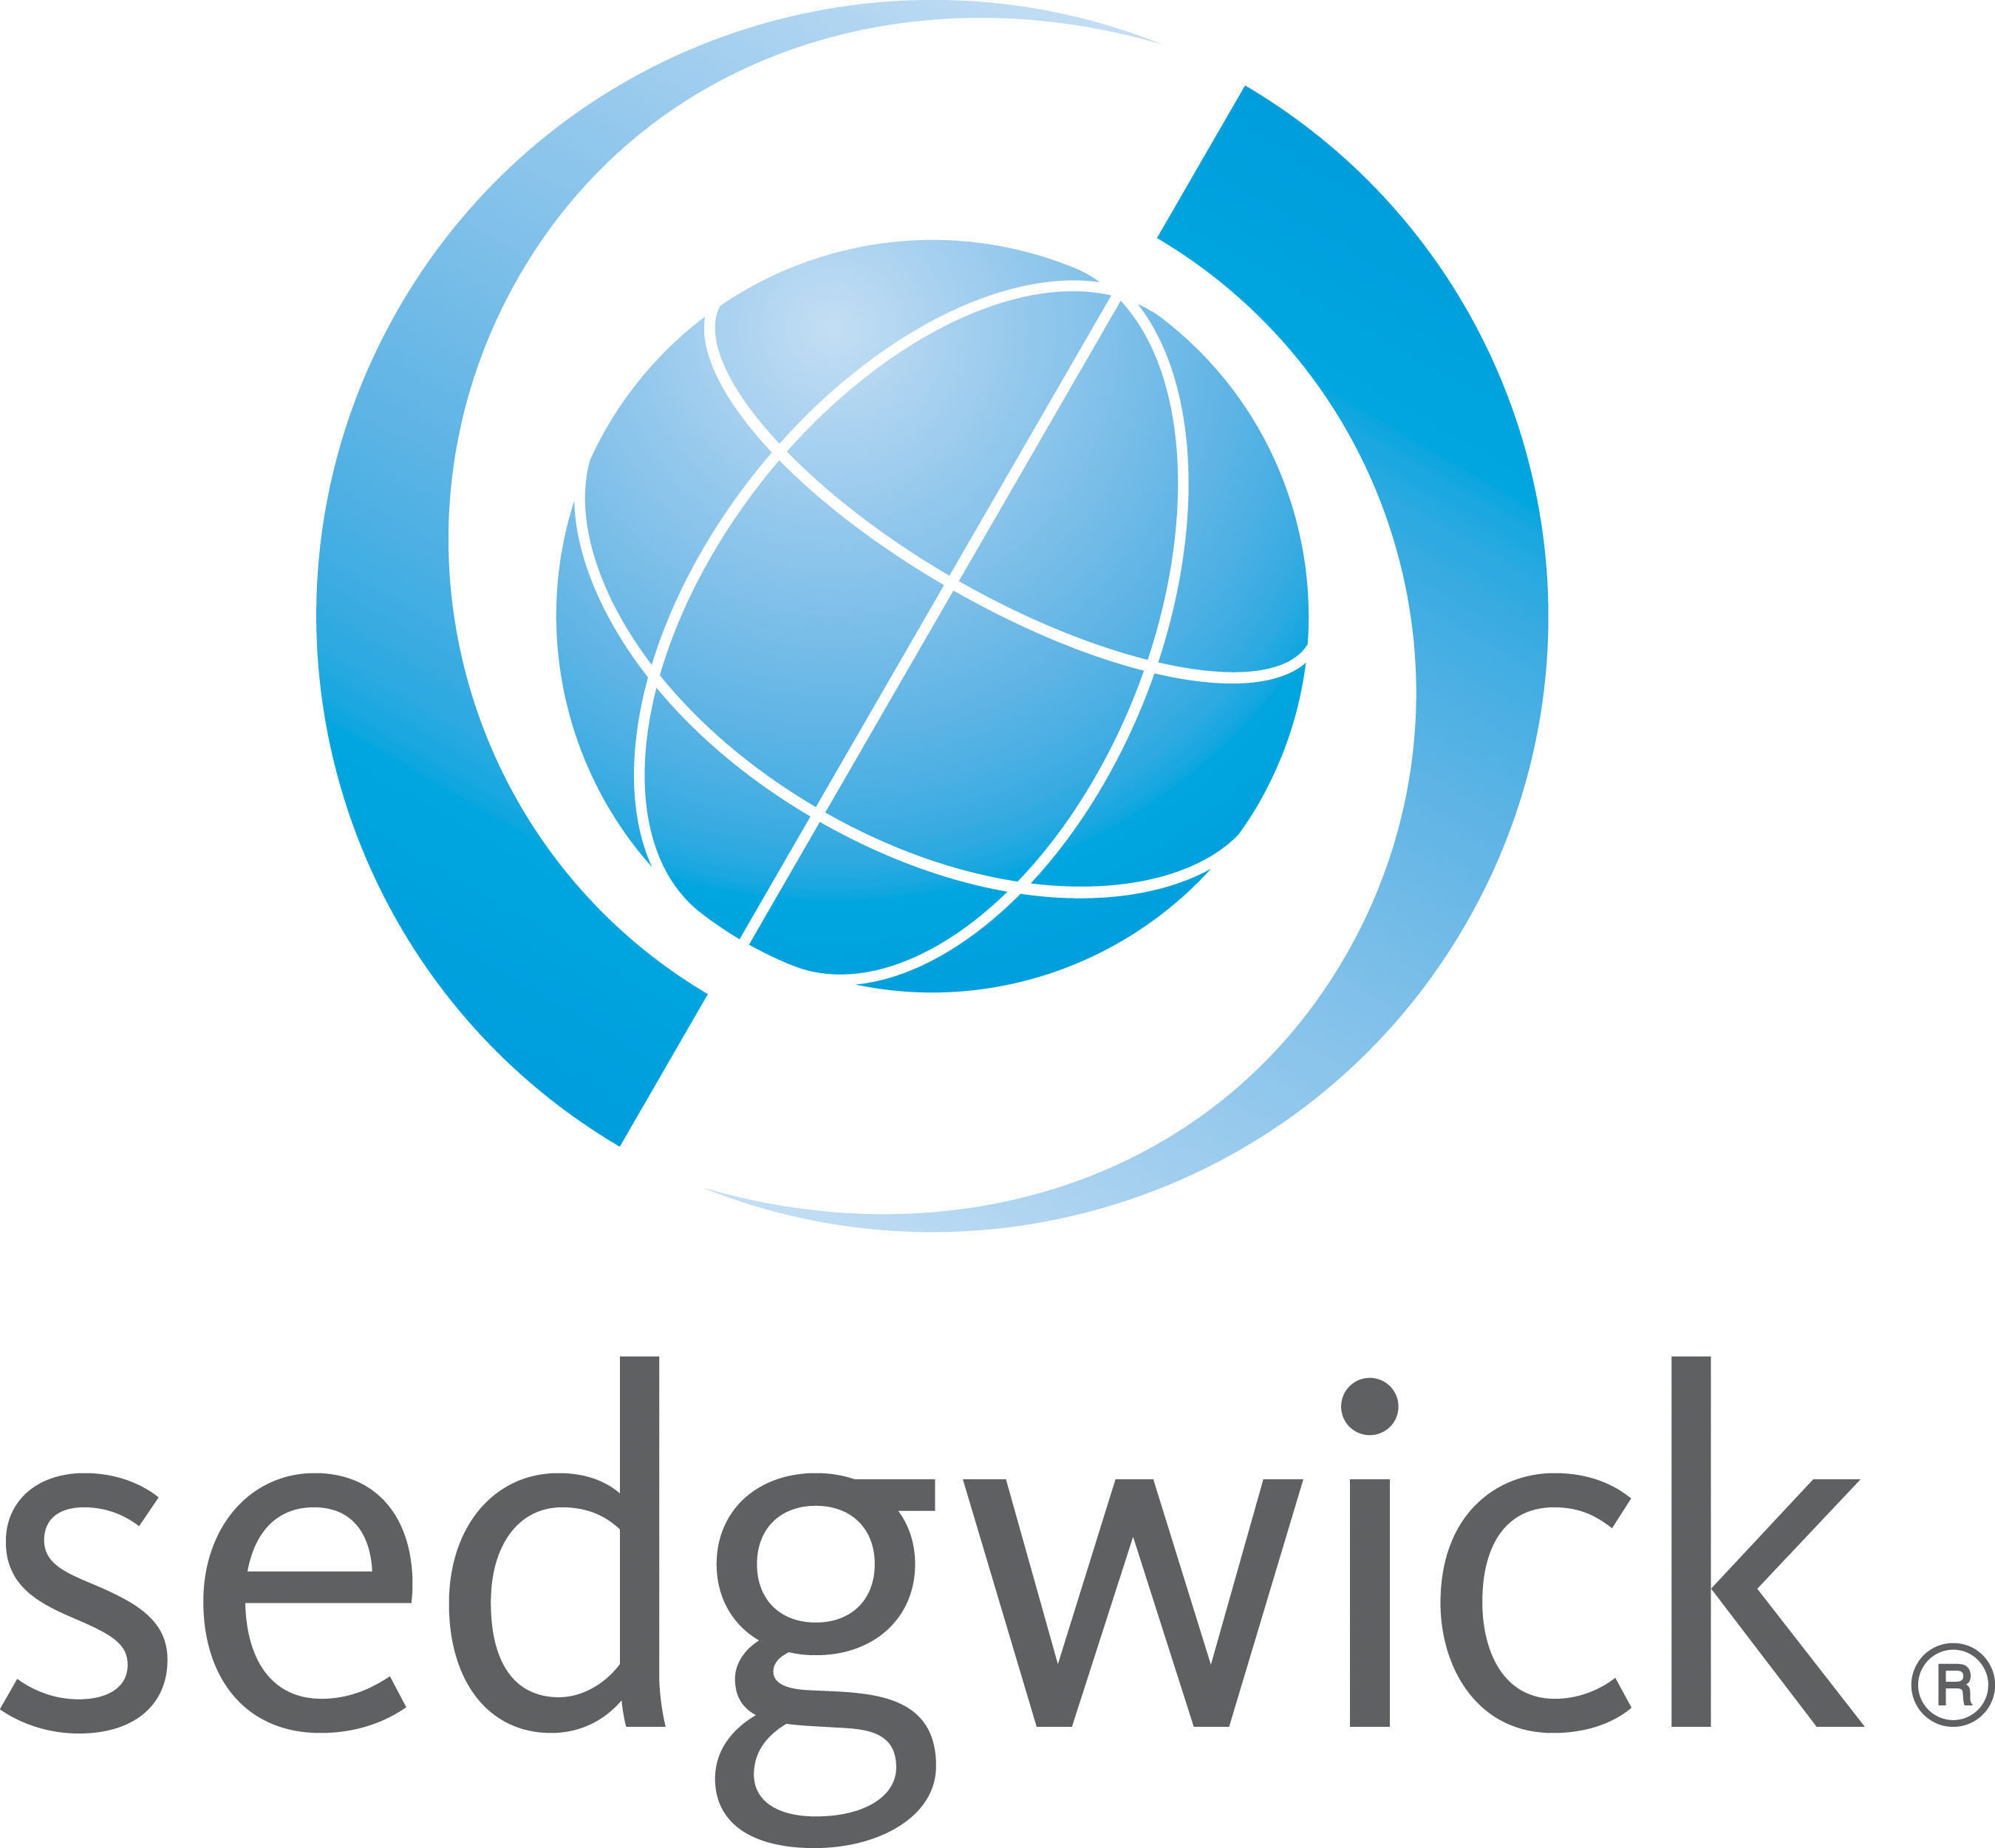 Sedgwick Logo. (PRNewsFoto/Sedgwick) (PRNewsFoto/)